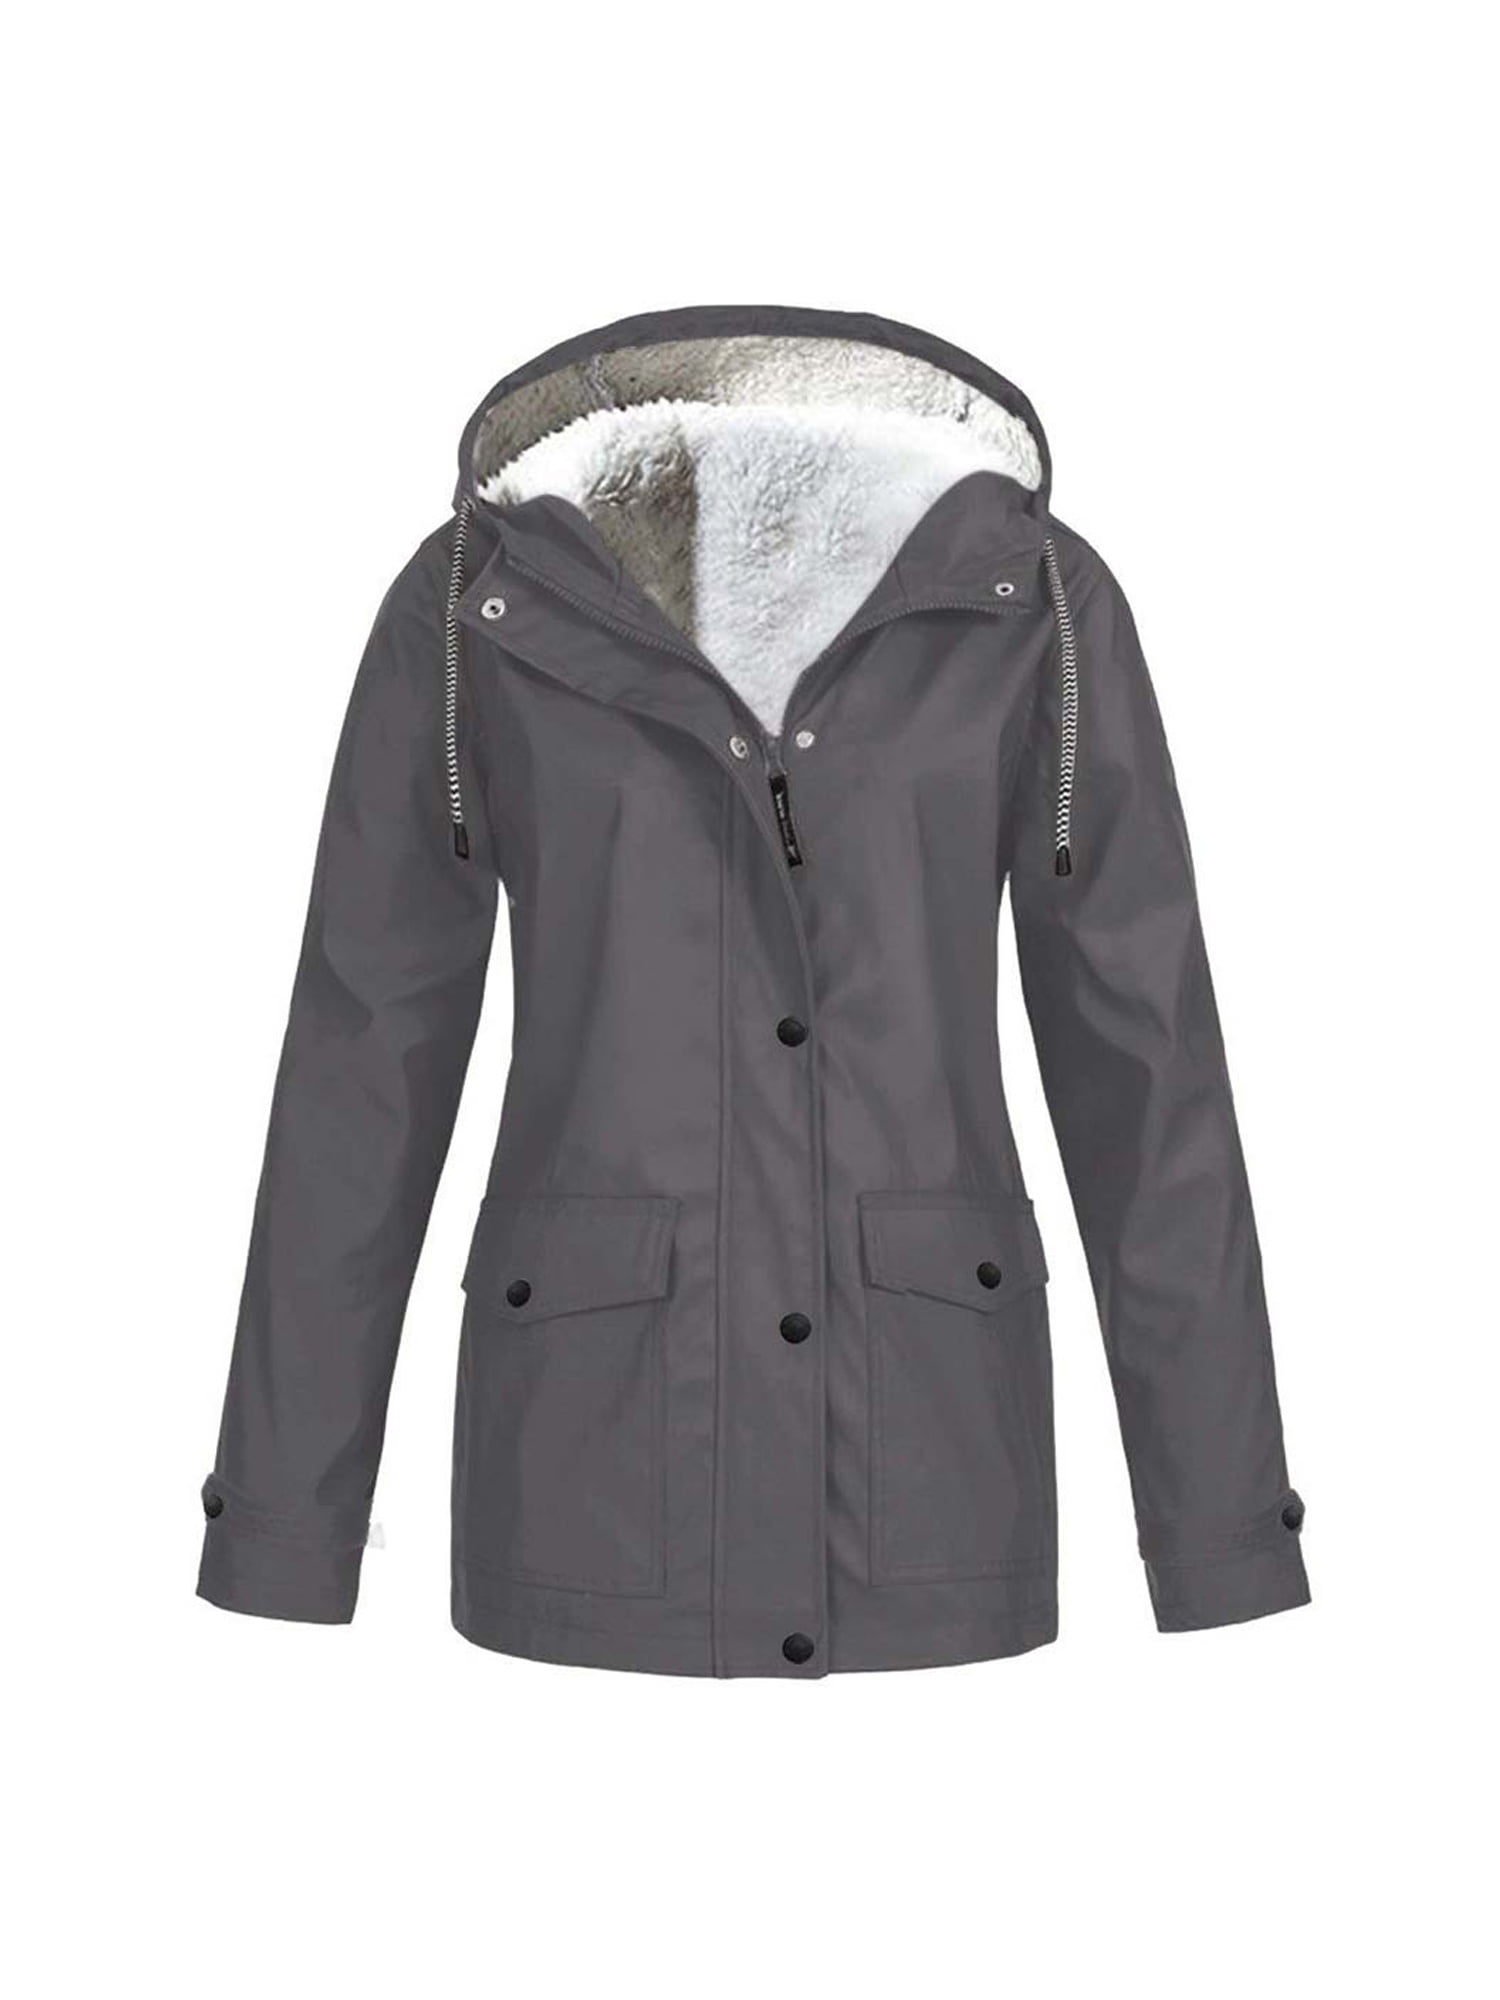 Womens Cotton Jackets with Hood Plus Size Coat Plaid/Floral/Leaves Print Button/Zipper Parka Pockets Outwear Windbreaker 